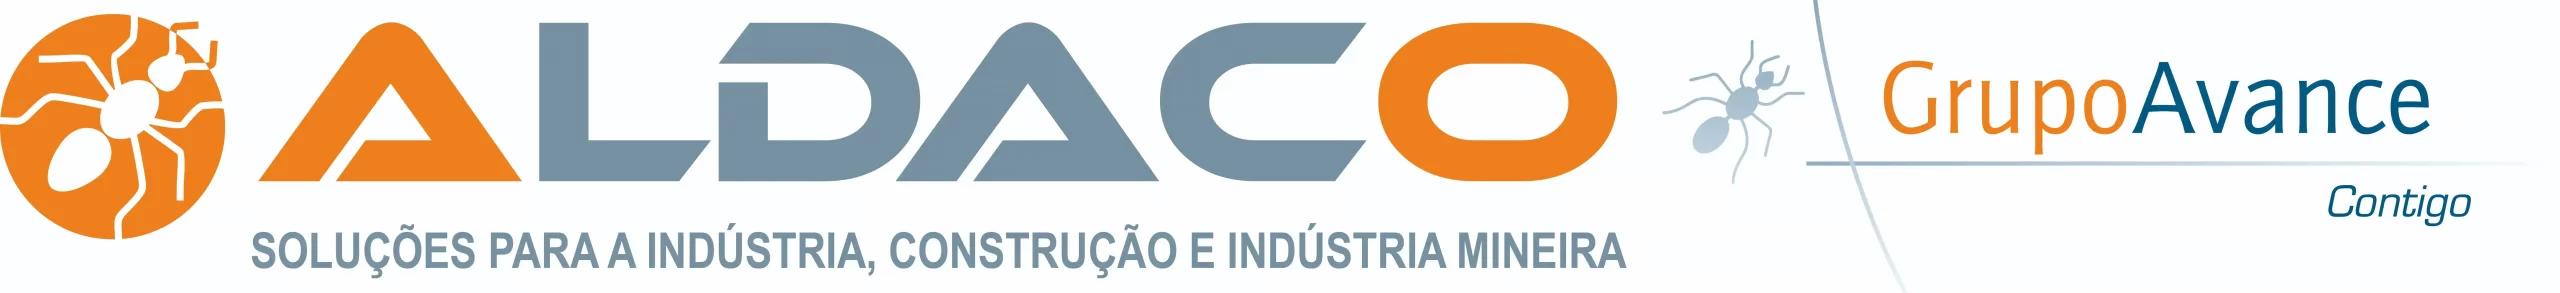 Logo Aldaco GrupoAvance PT